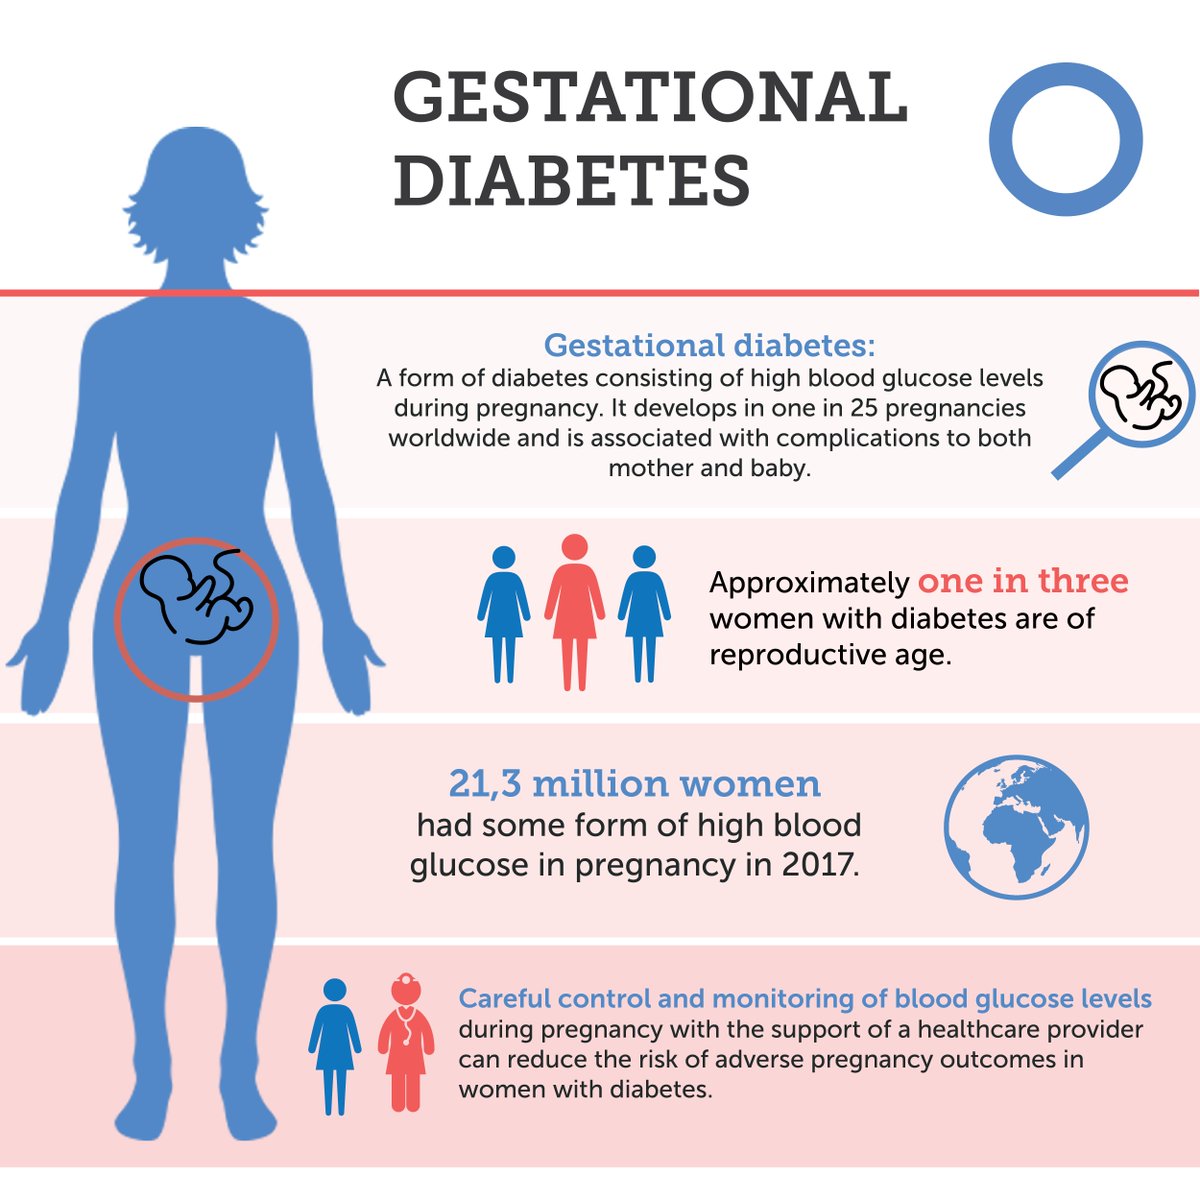 Gestational diabetes prevention